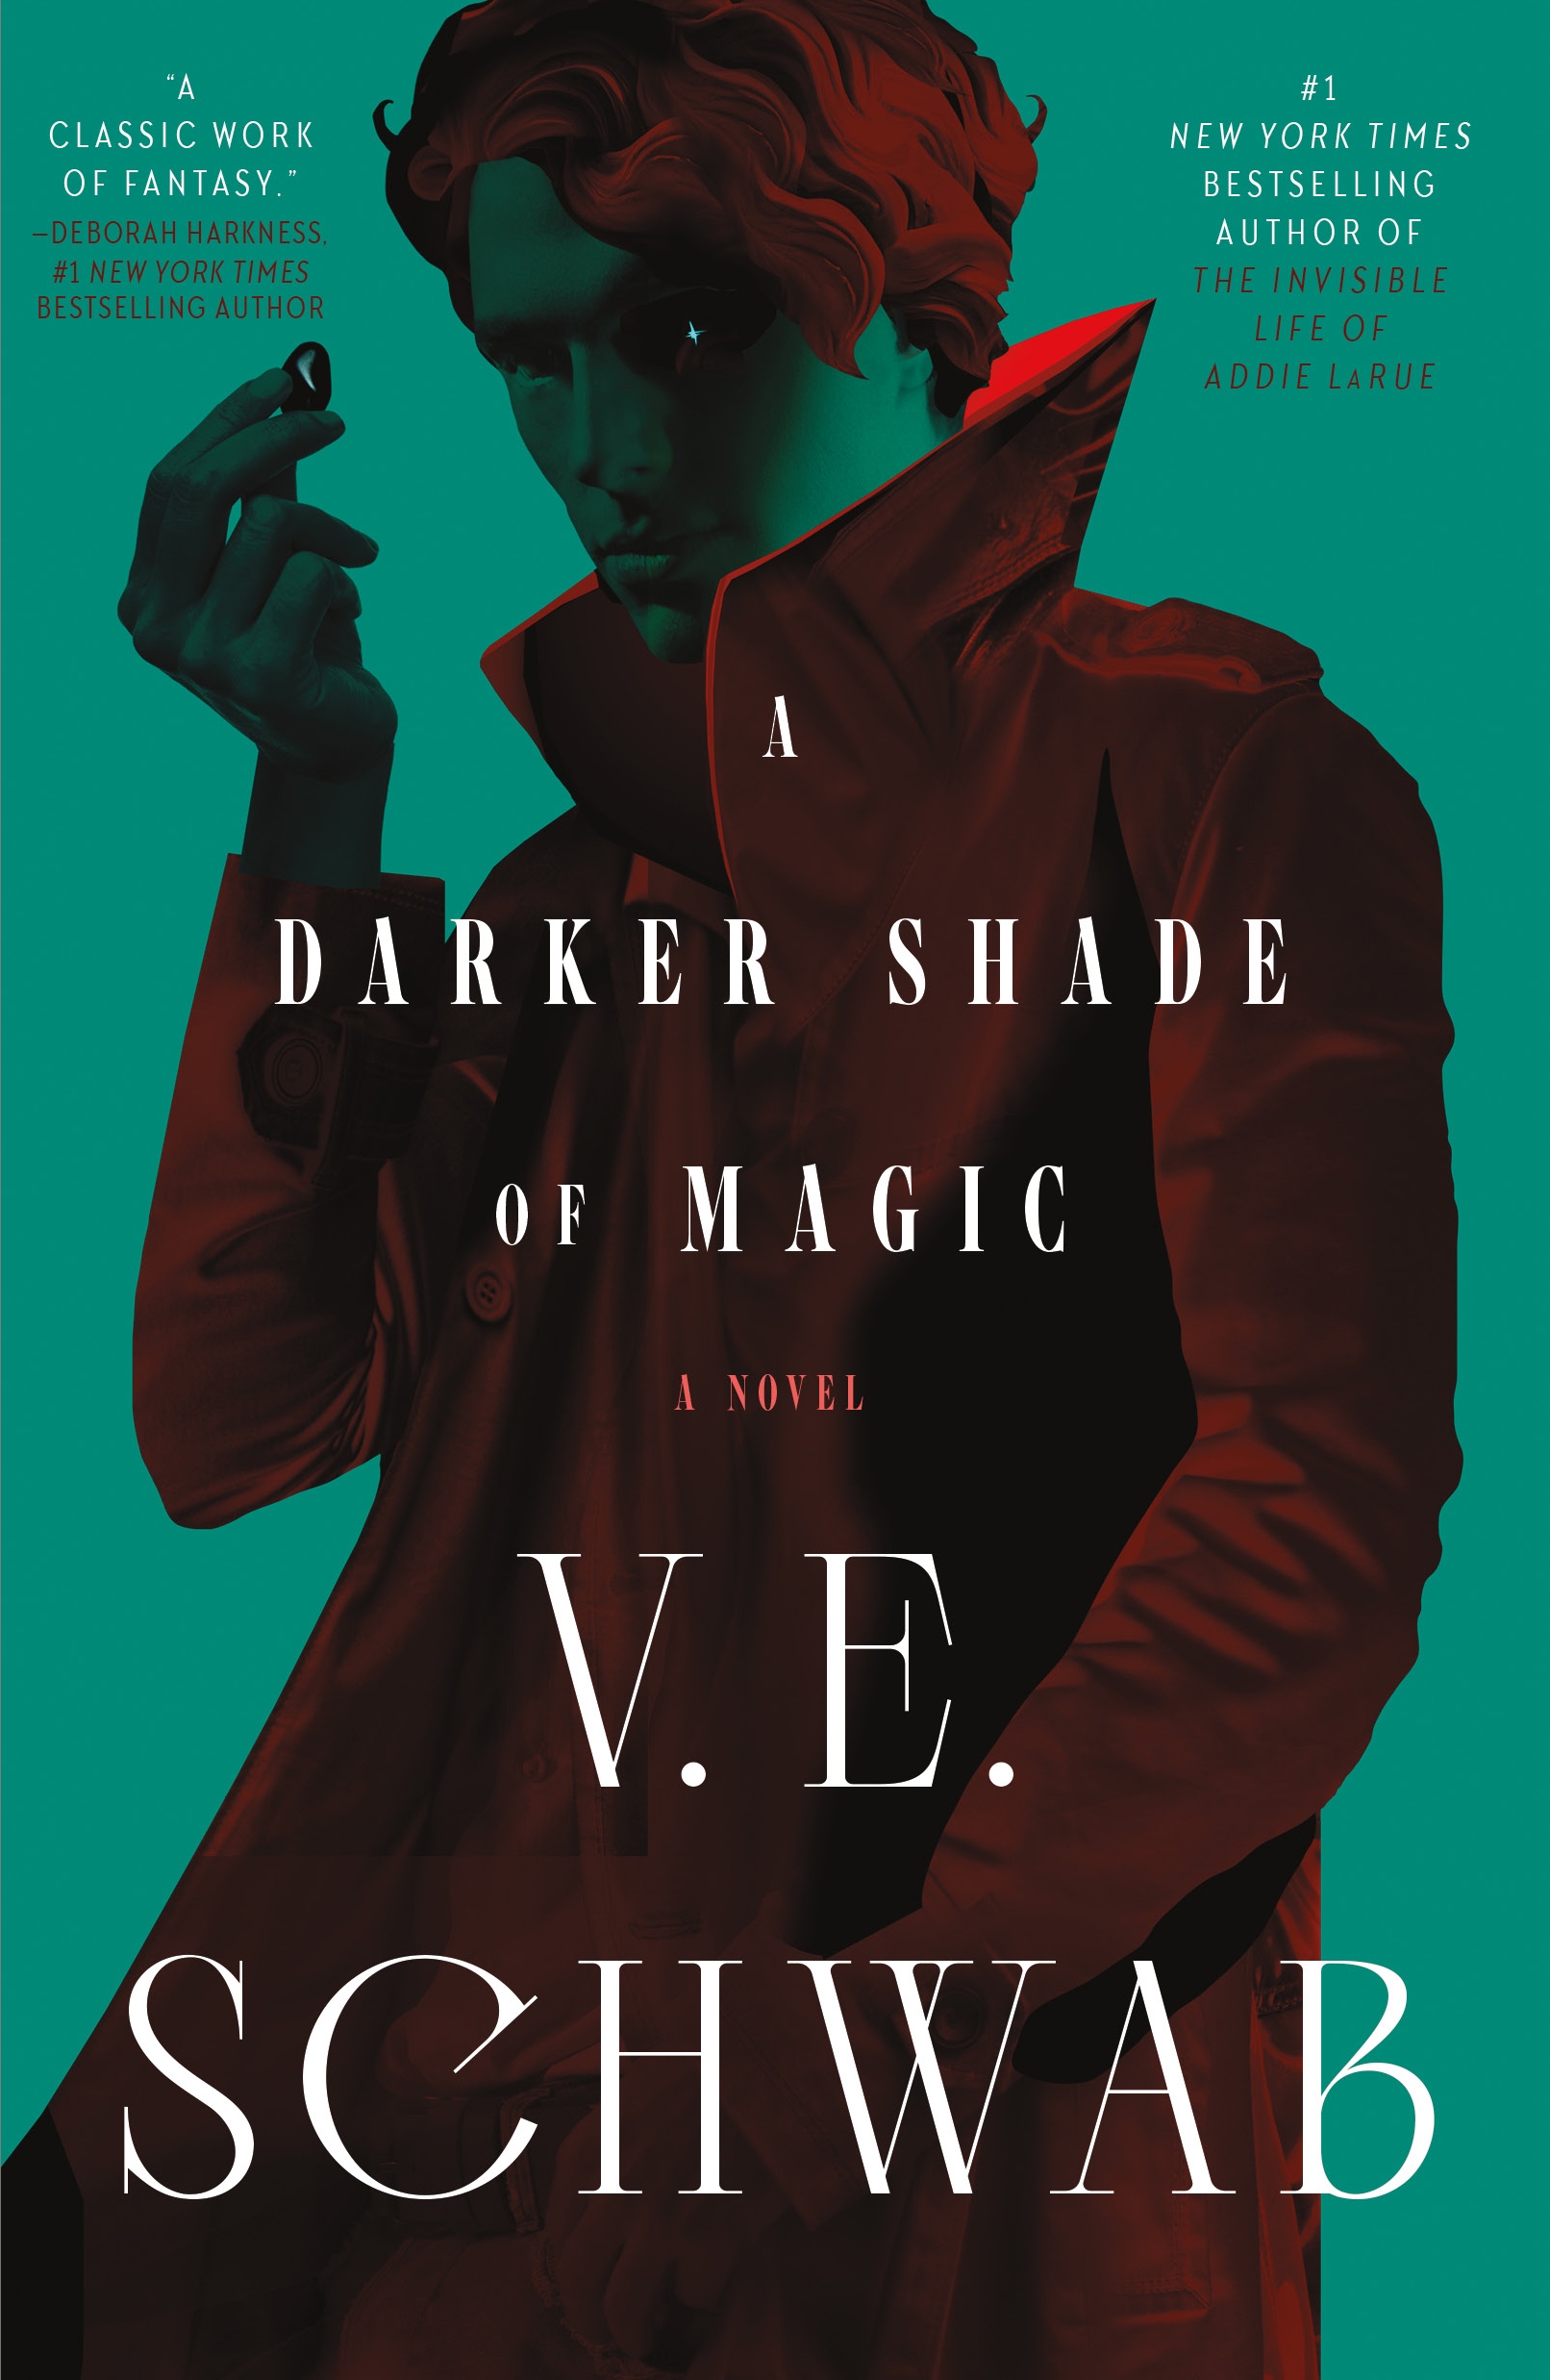 A Darker Shade of Magic : A Novel by V. E. Schwab